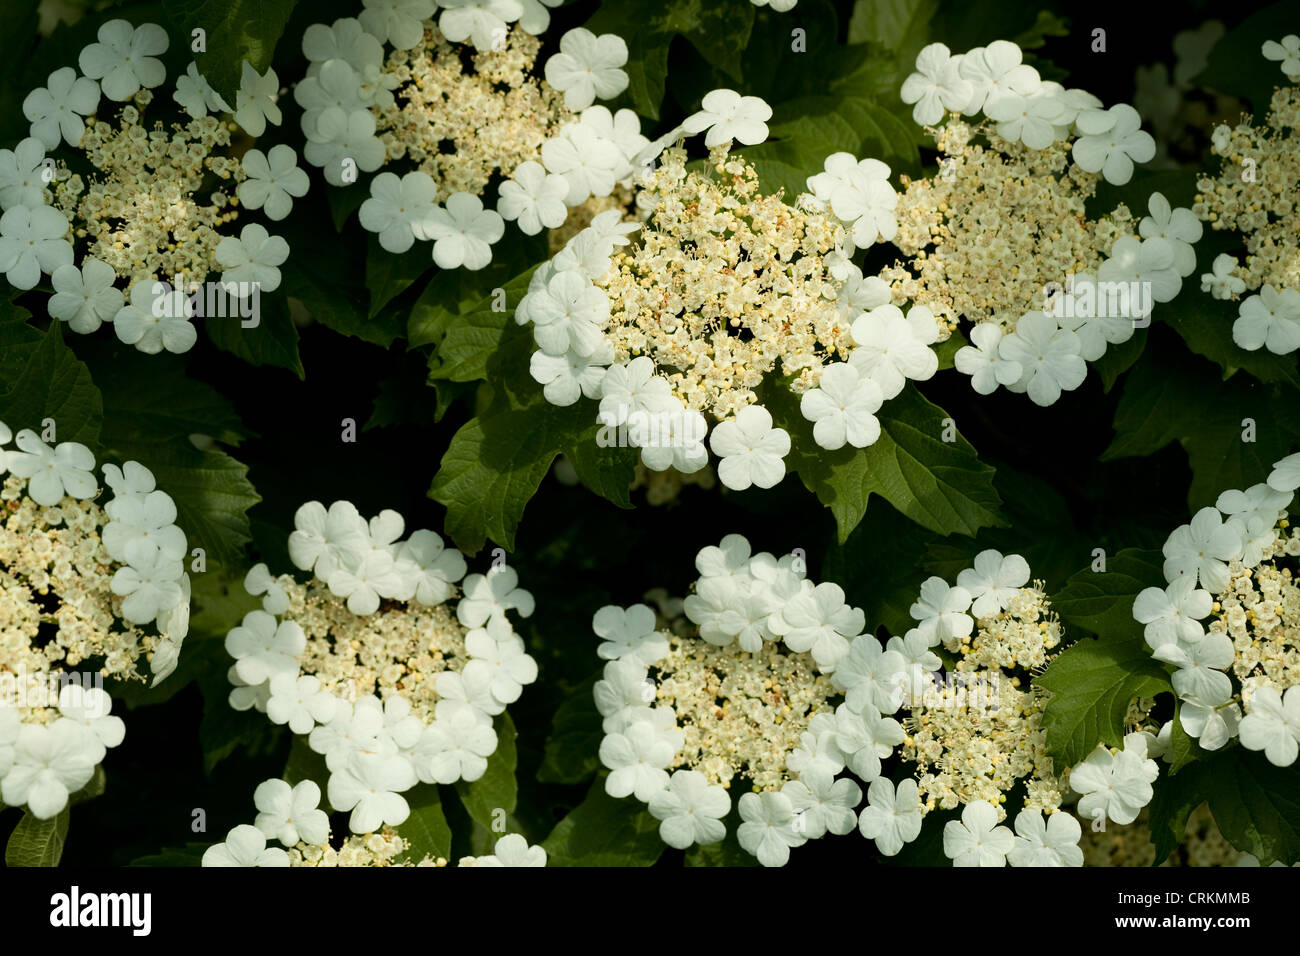 bush of viburnum with white flower as background Stock Photo